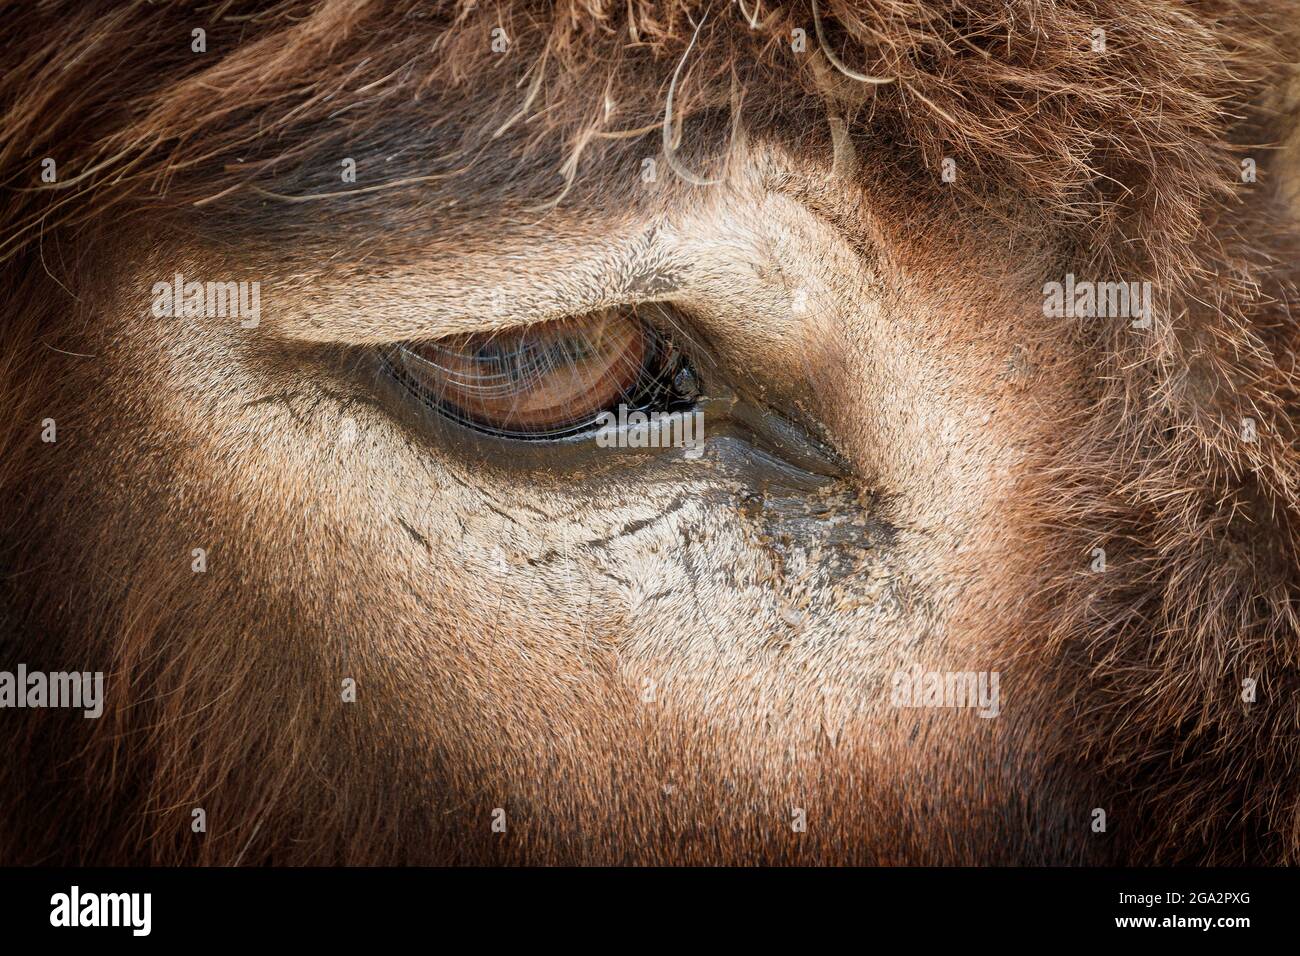 Donkey at a donkey sanctuary. Close-up detail of the eye. Stock Photo